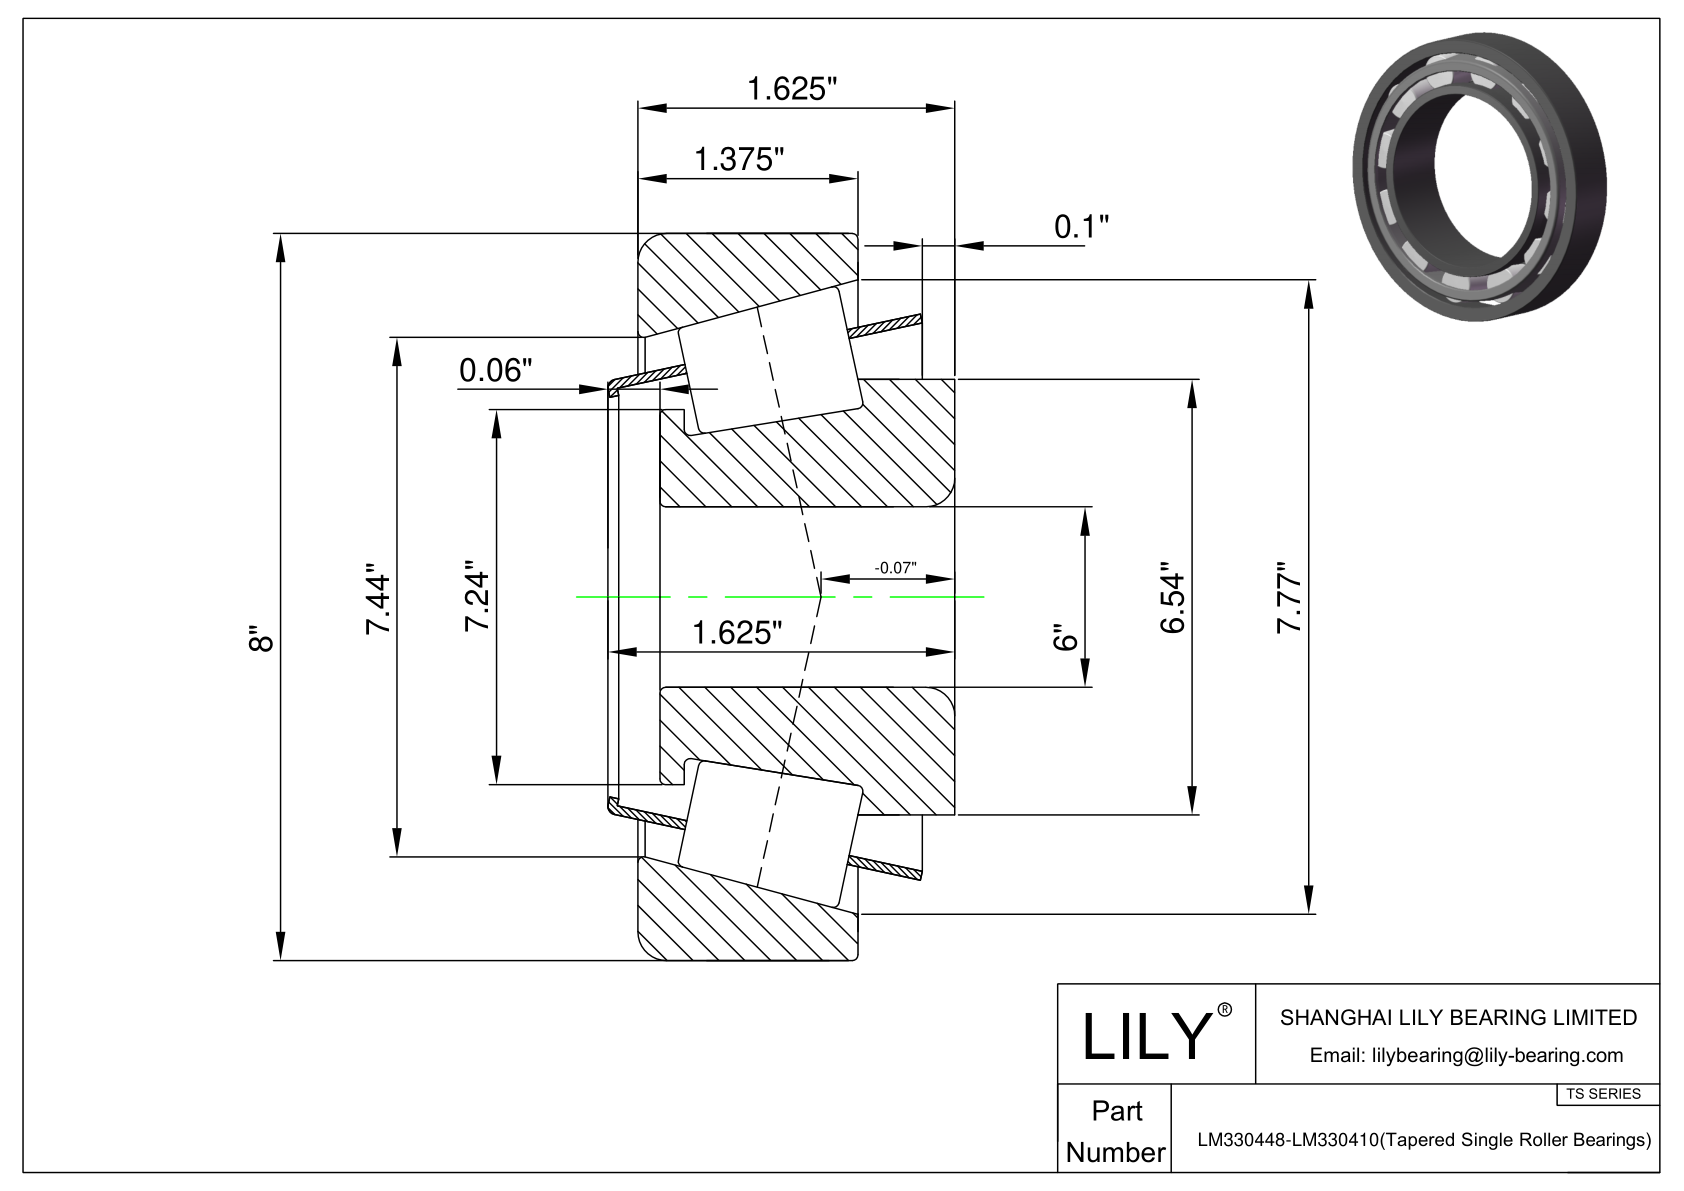 LM330448-LM330410 TS系列(圆锥单滚子轴承)(英制) CAD图形